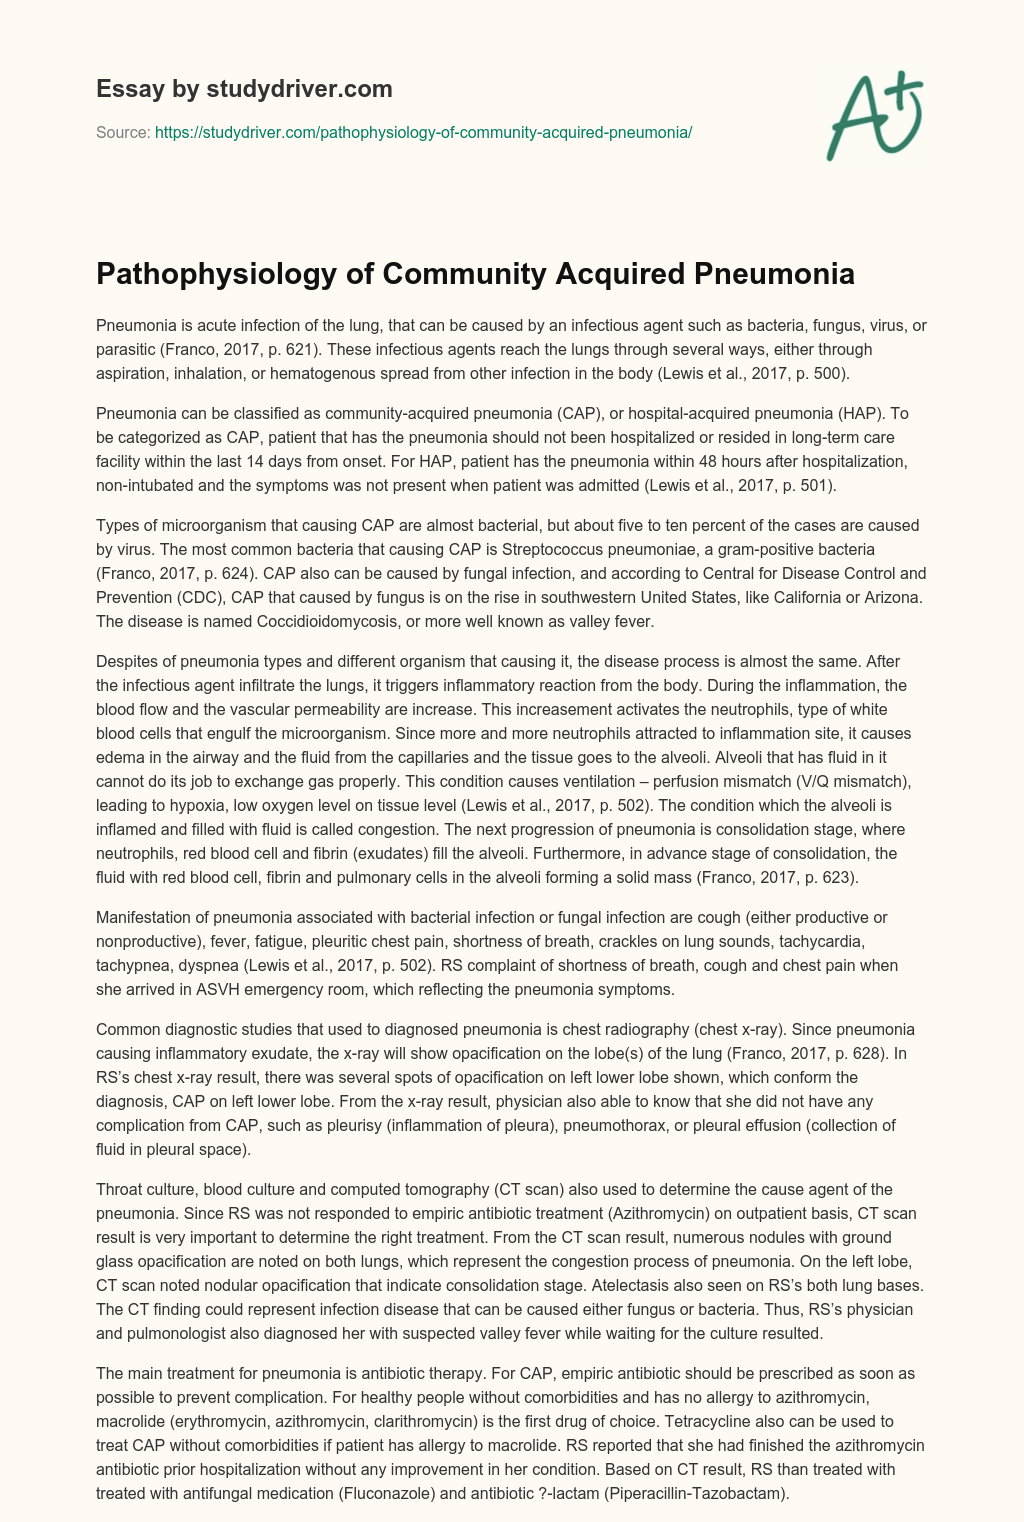 Pathophysiology of Community Acquired Pneumonia essay